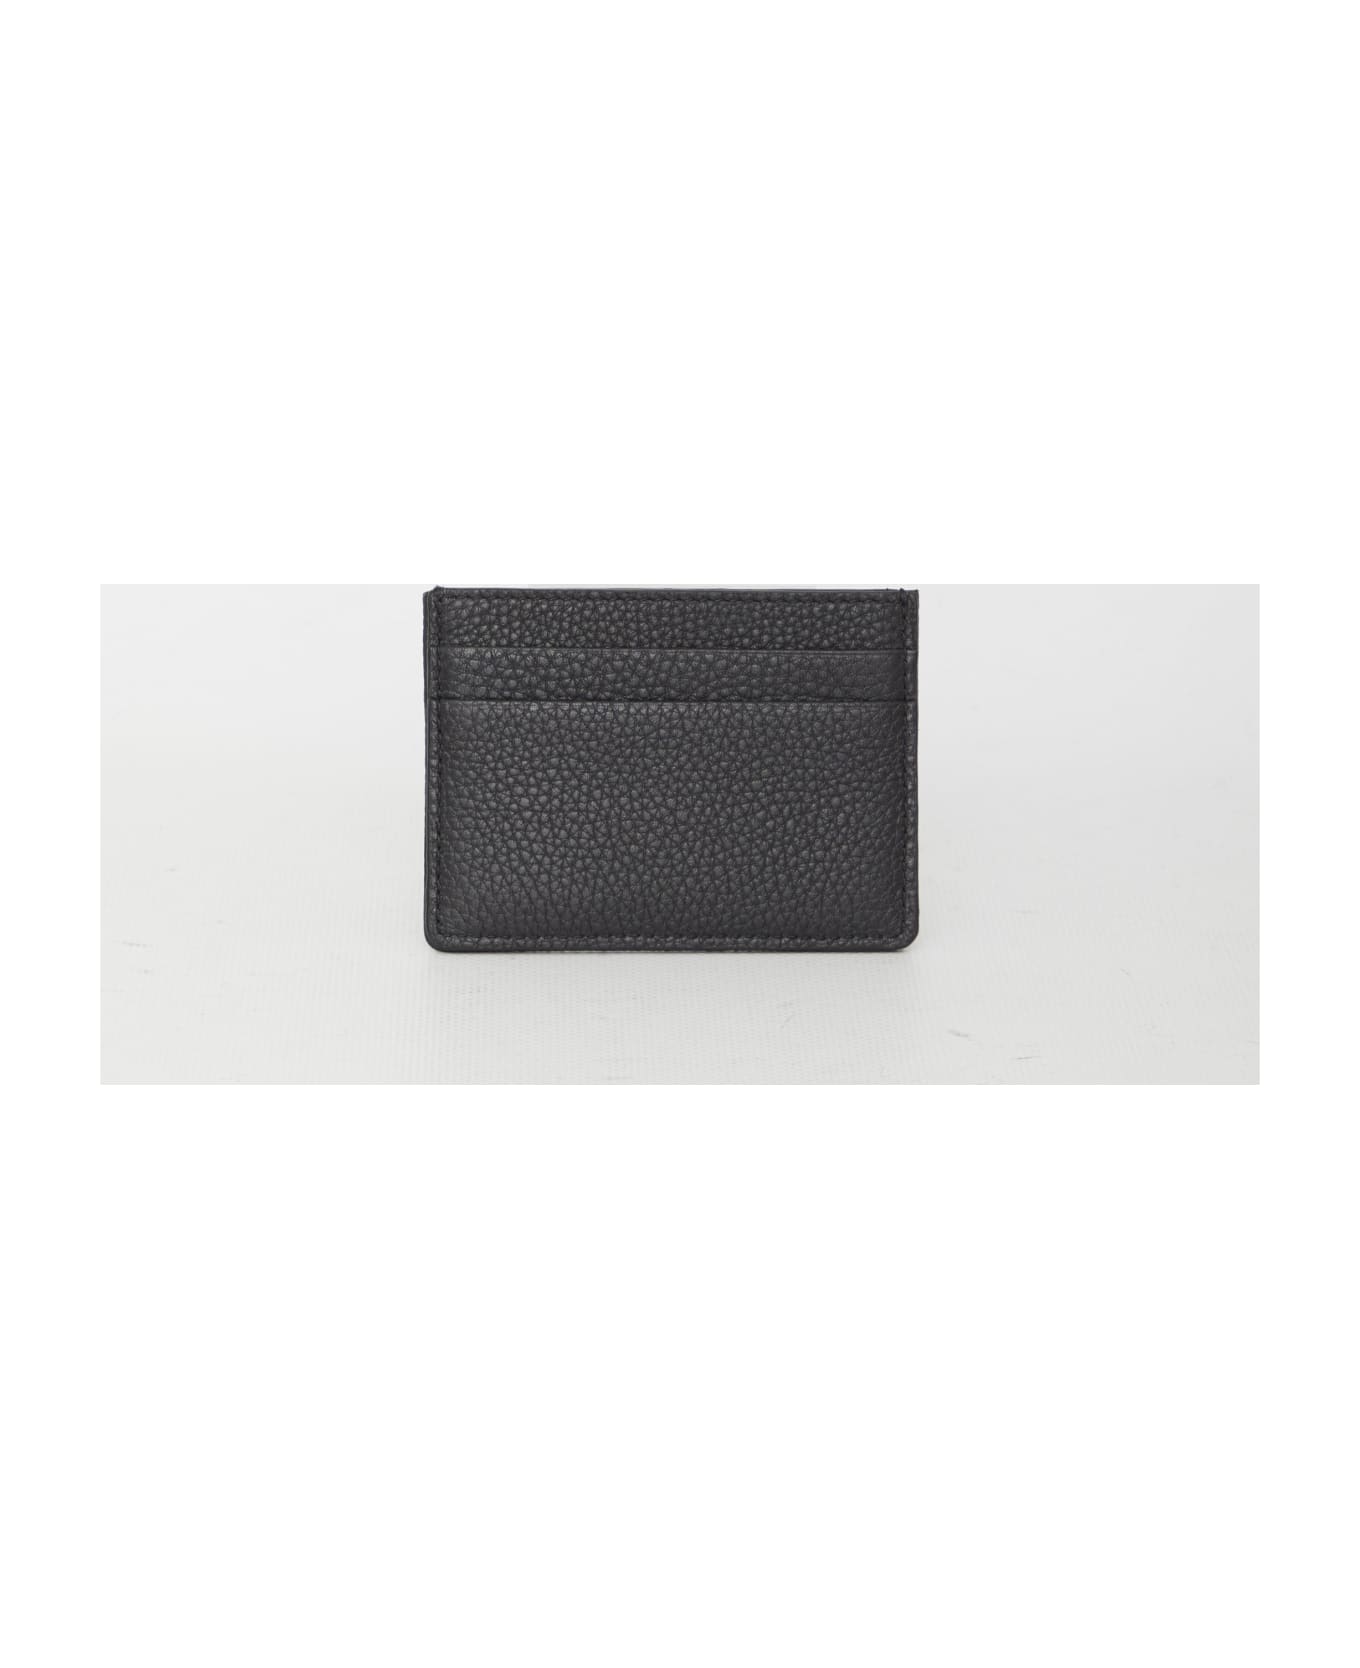 Valentino Garavani Leather Card Holder - BLACK 財布